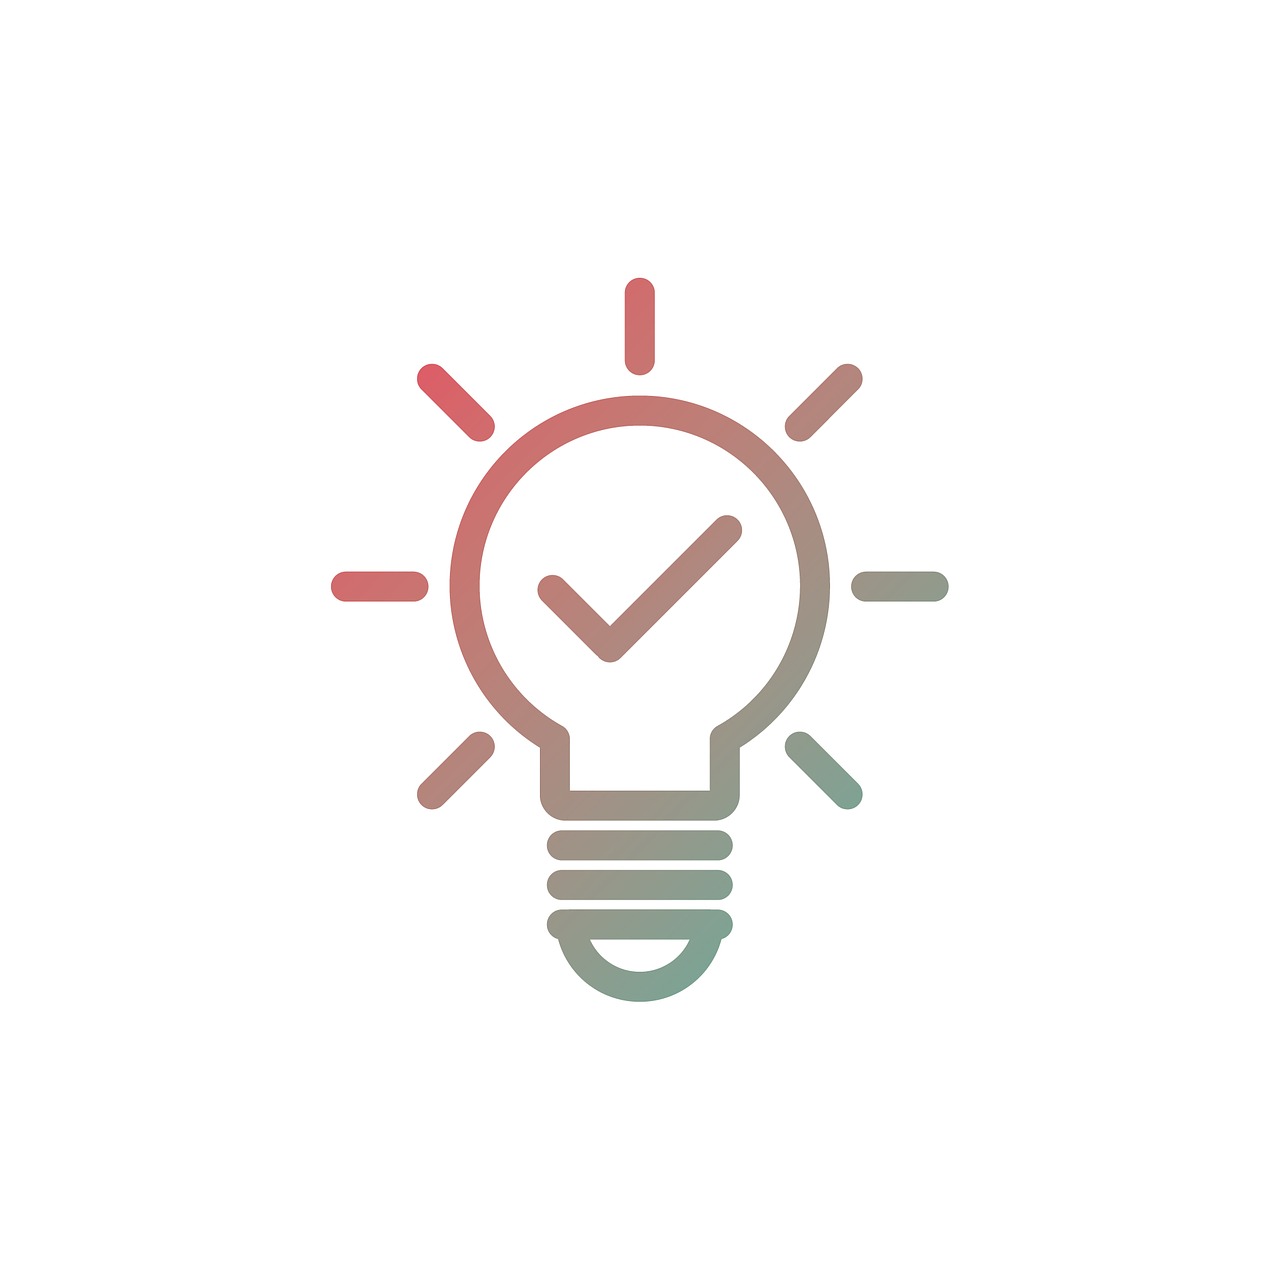 Idea Icon Business Design Symbol  - Memed_Nurrohmad / Pixabay